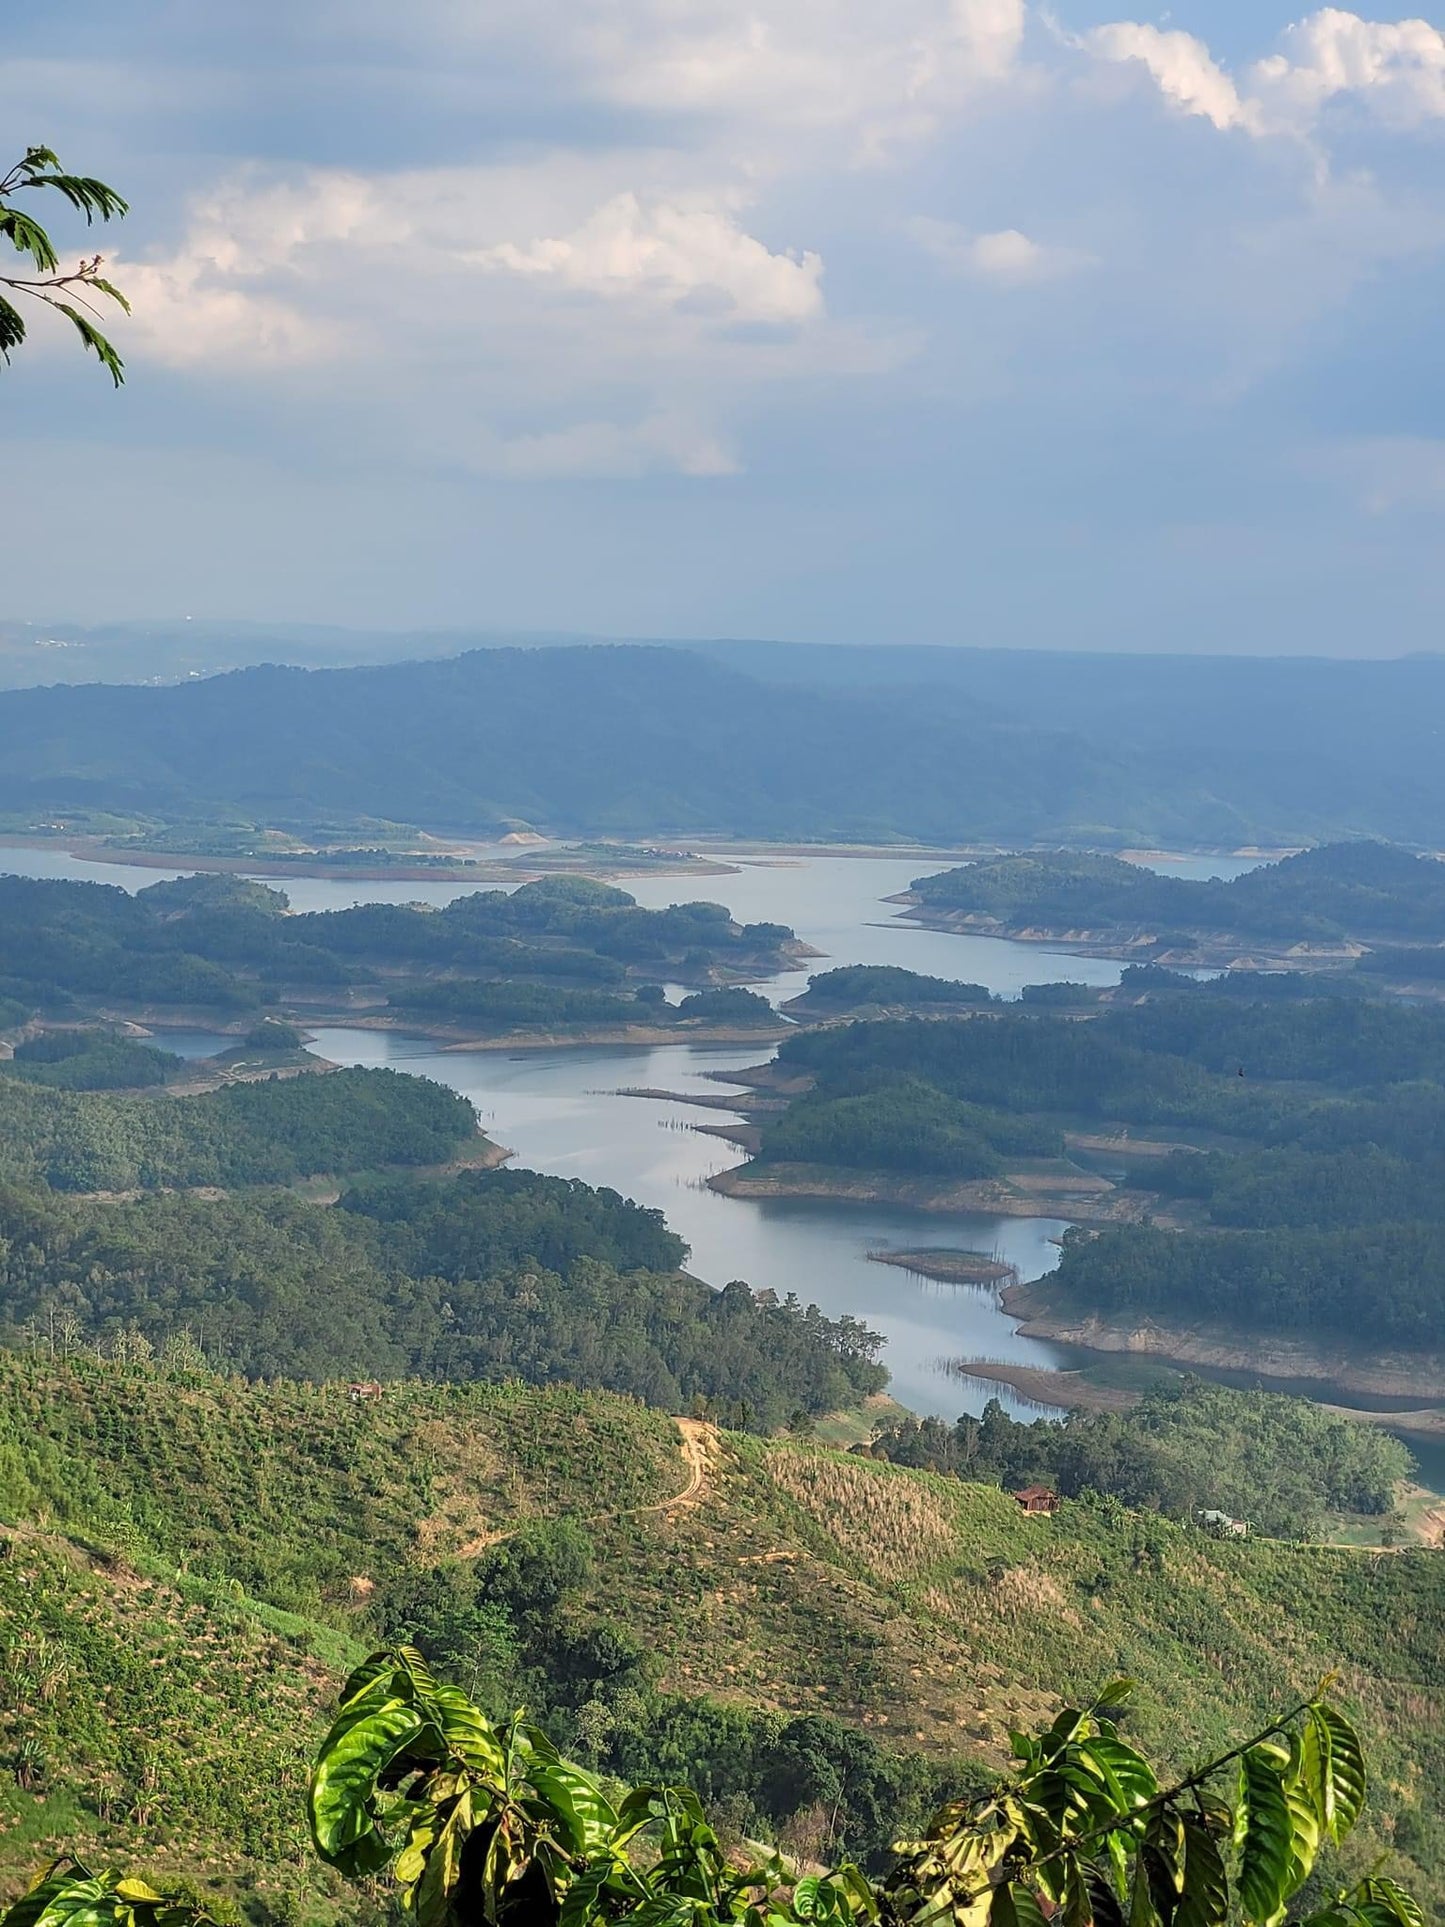 69B: (2 天) Lieng Nung 瀑布和 Ta Dung 湖：隐藏在 Daknong 省瀑布和雄伟湖泊深处